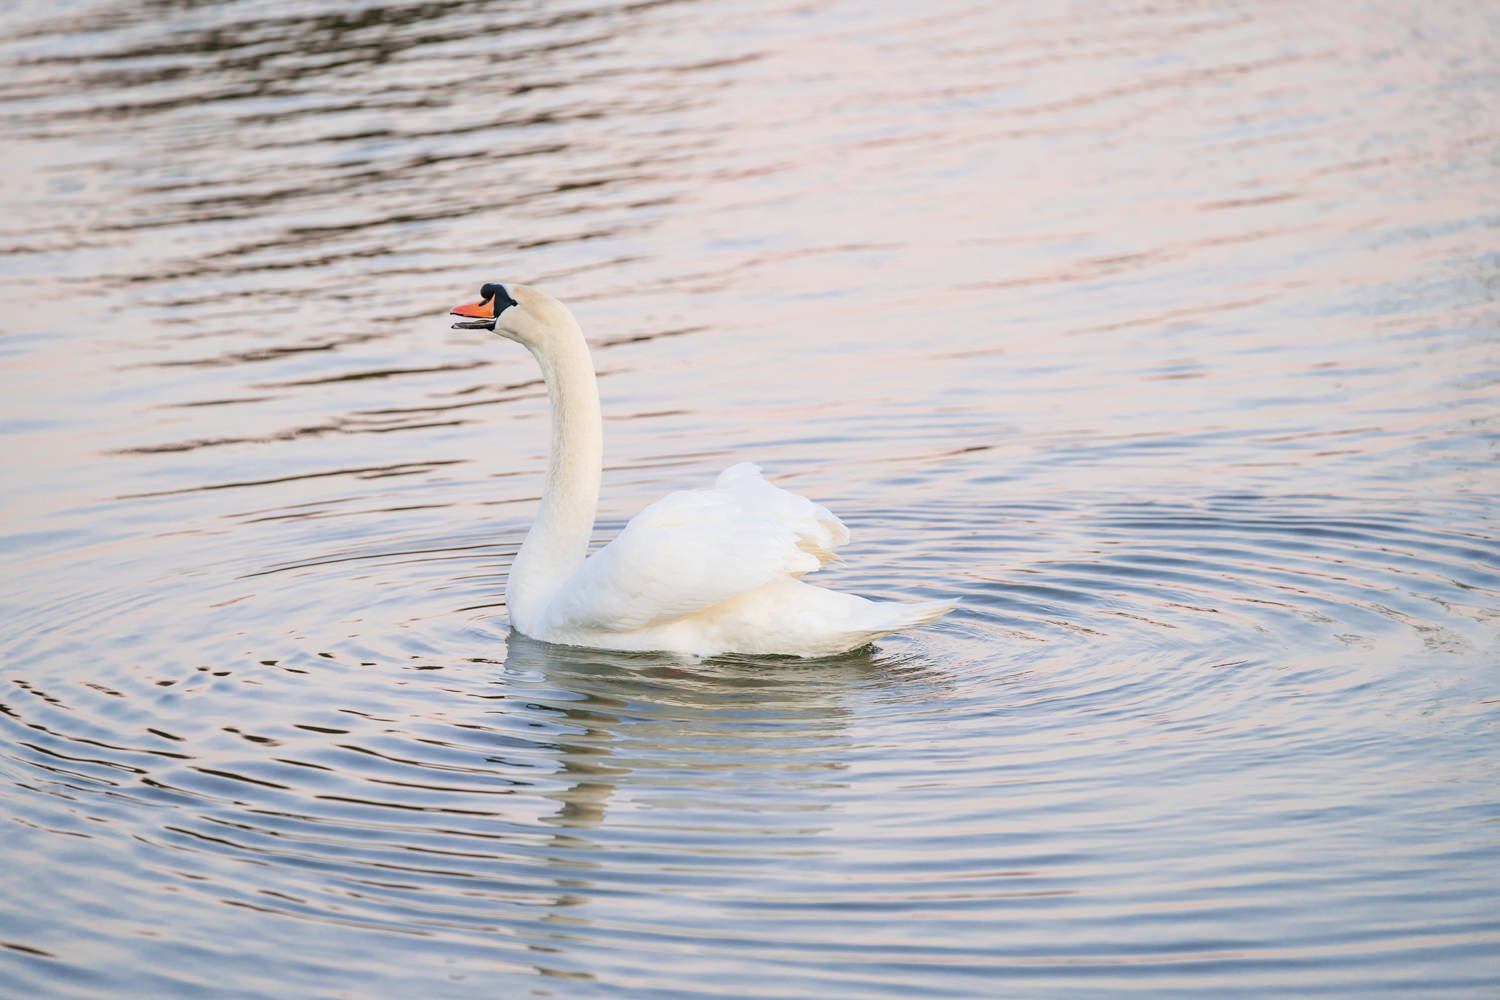 A swan swimming